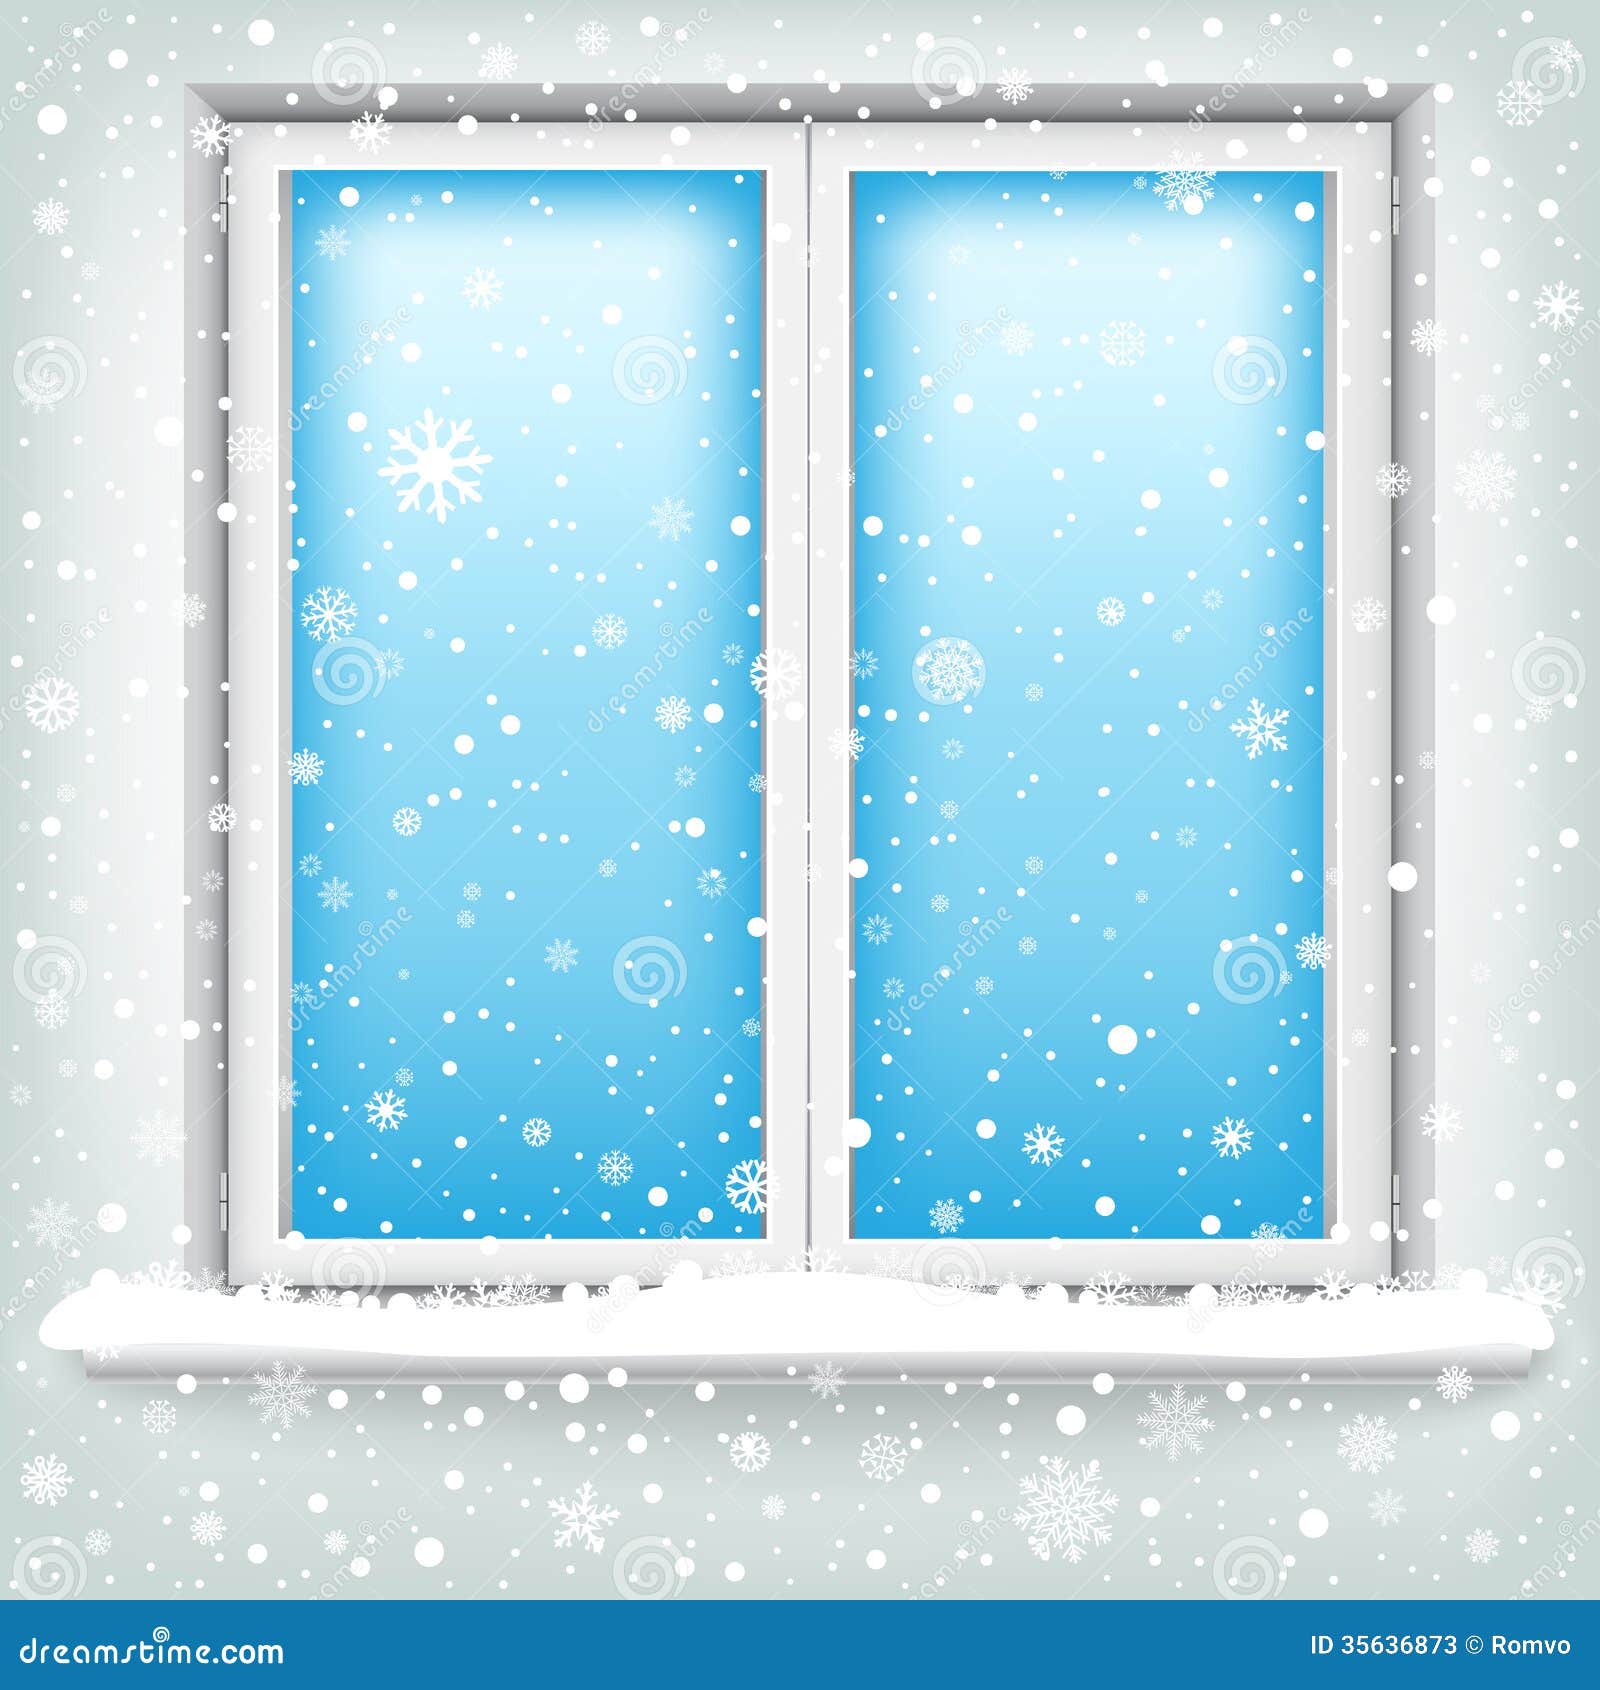 winter window clipart - photo #13